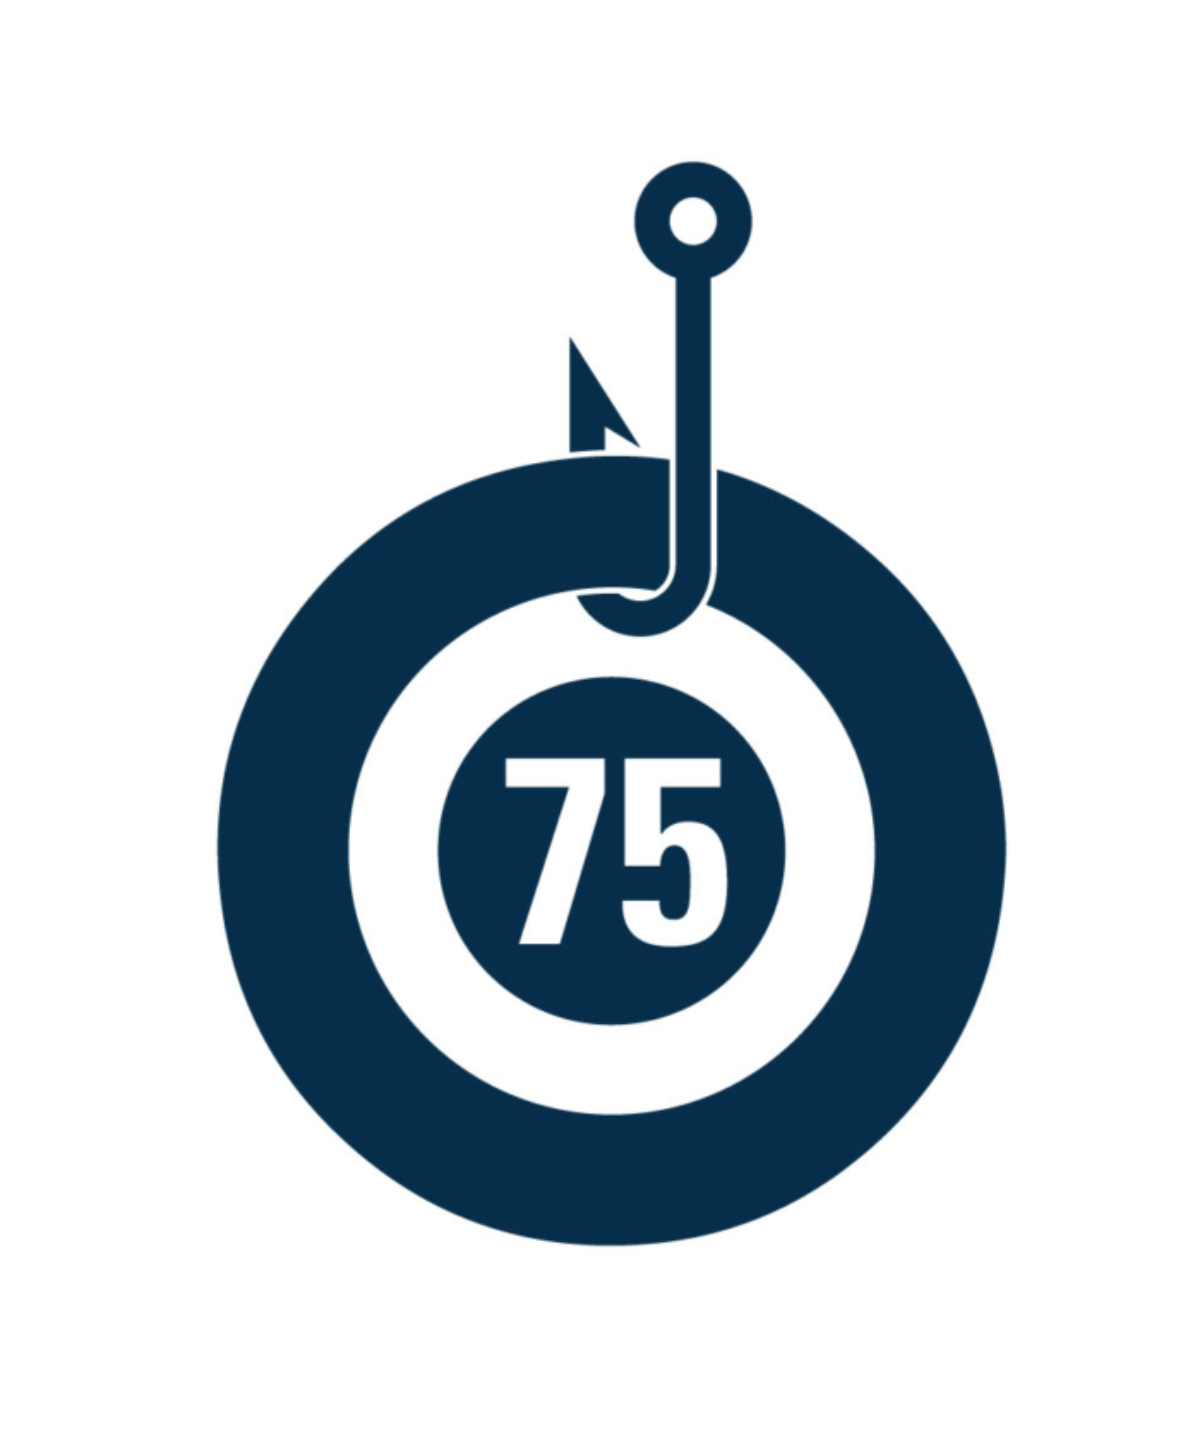 Logotipo T75